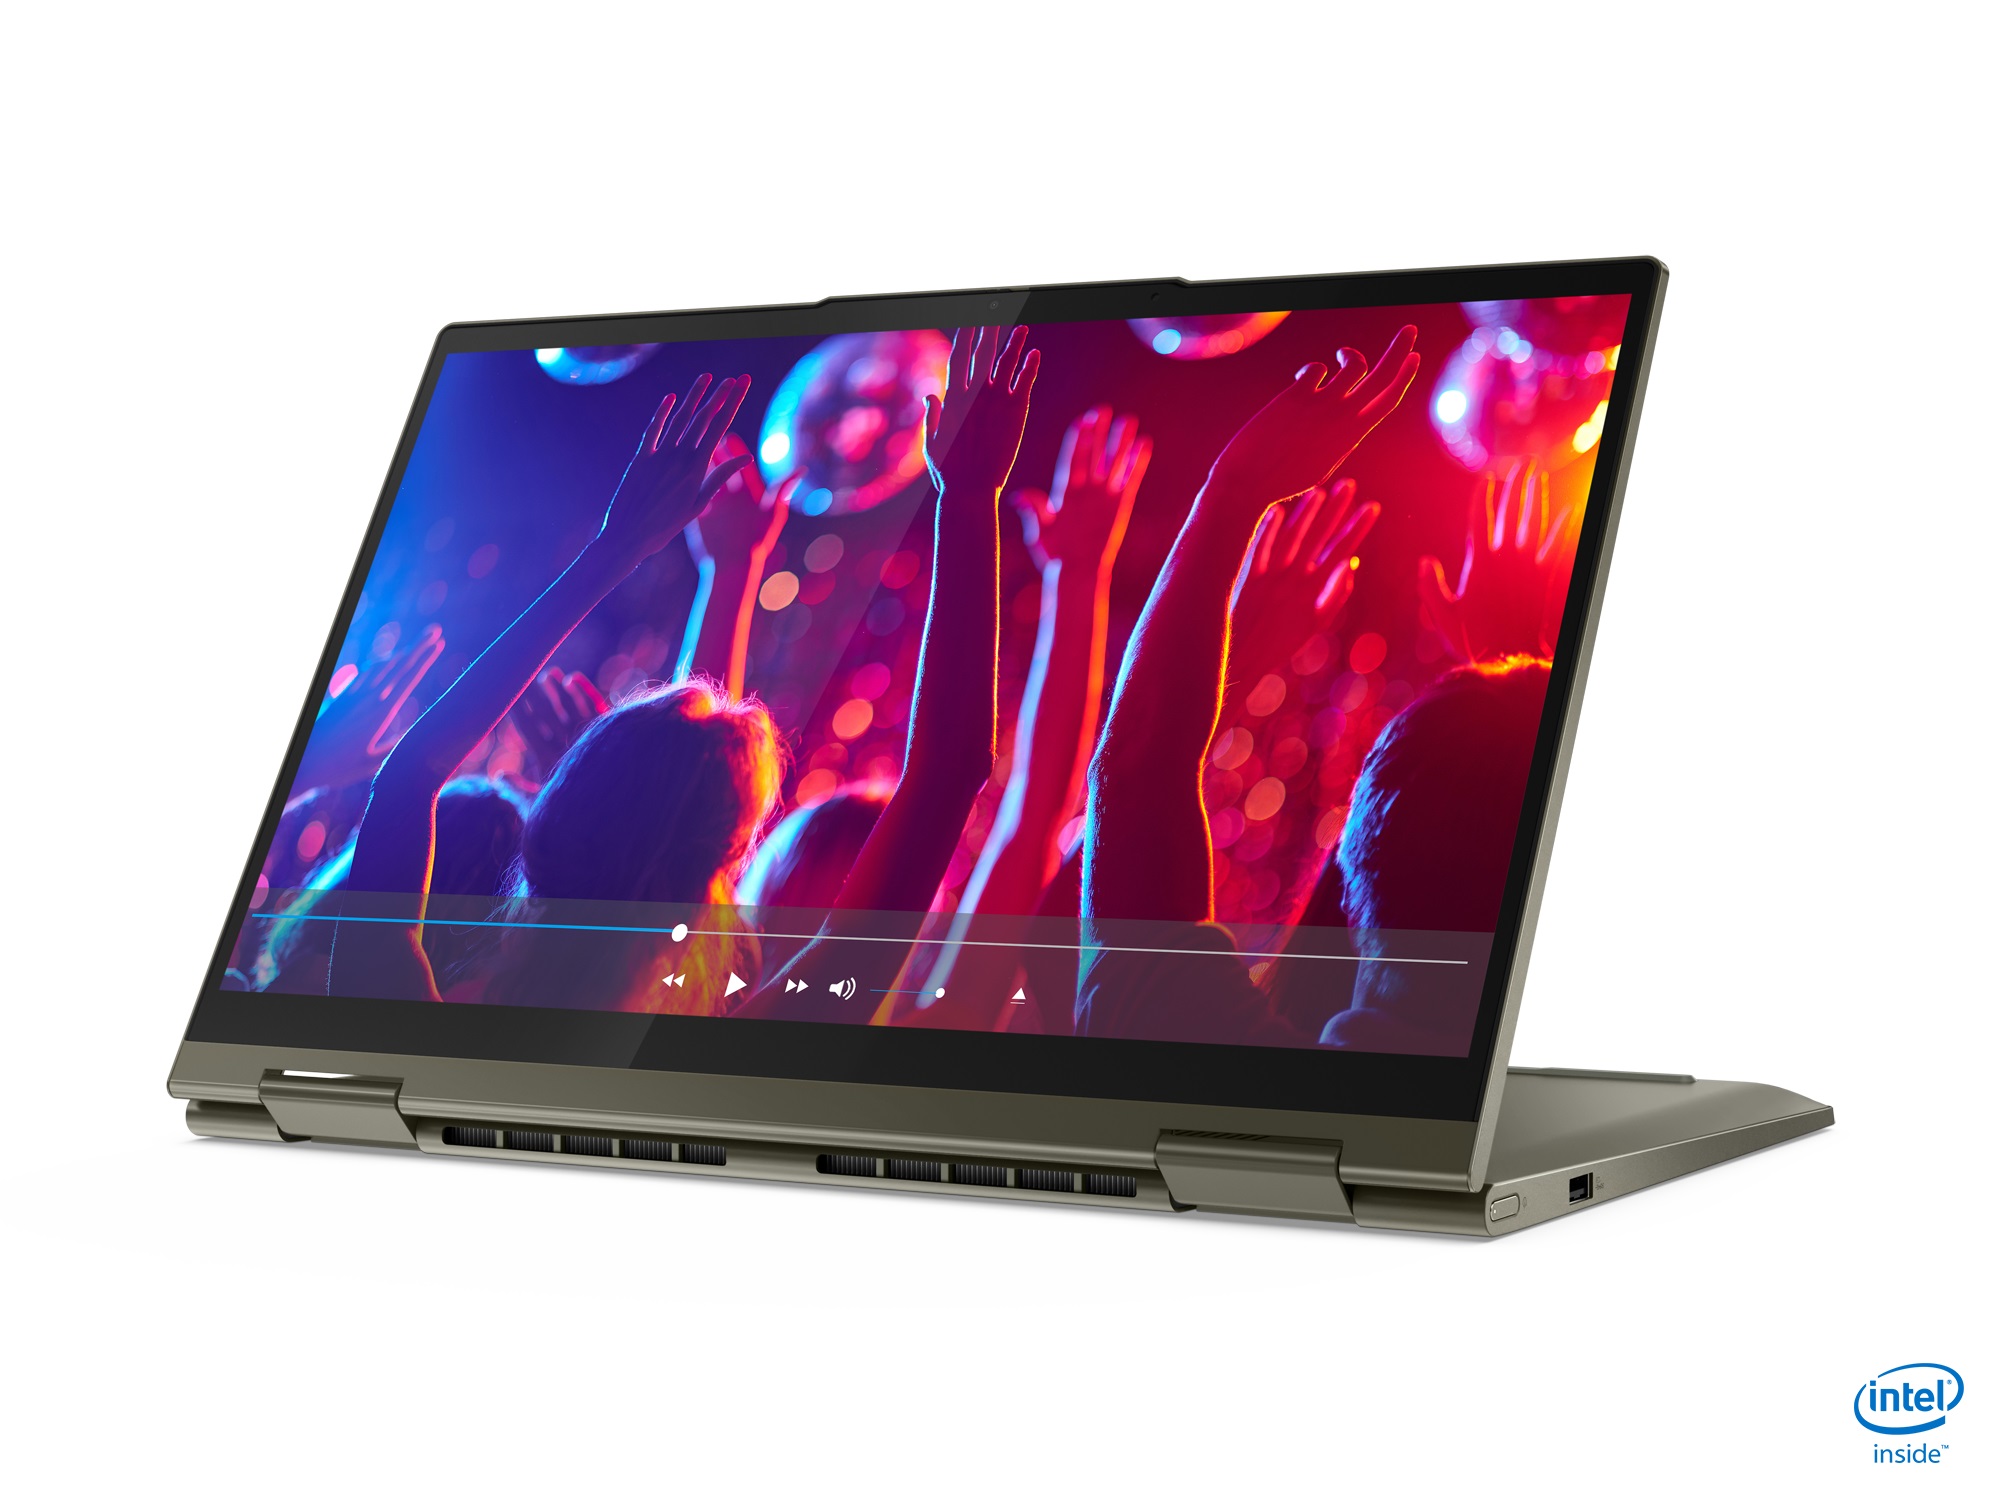 Lenovo introduces new Yoga consumer laptops running Windows 10 39216e59aec824d3f038b03c1055e160.jpg